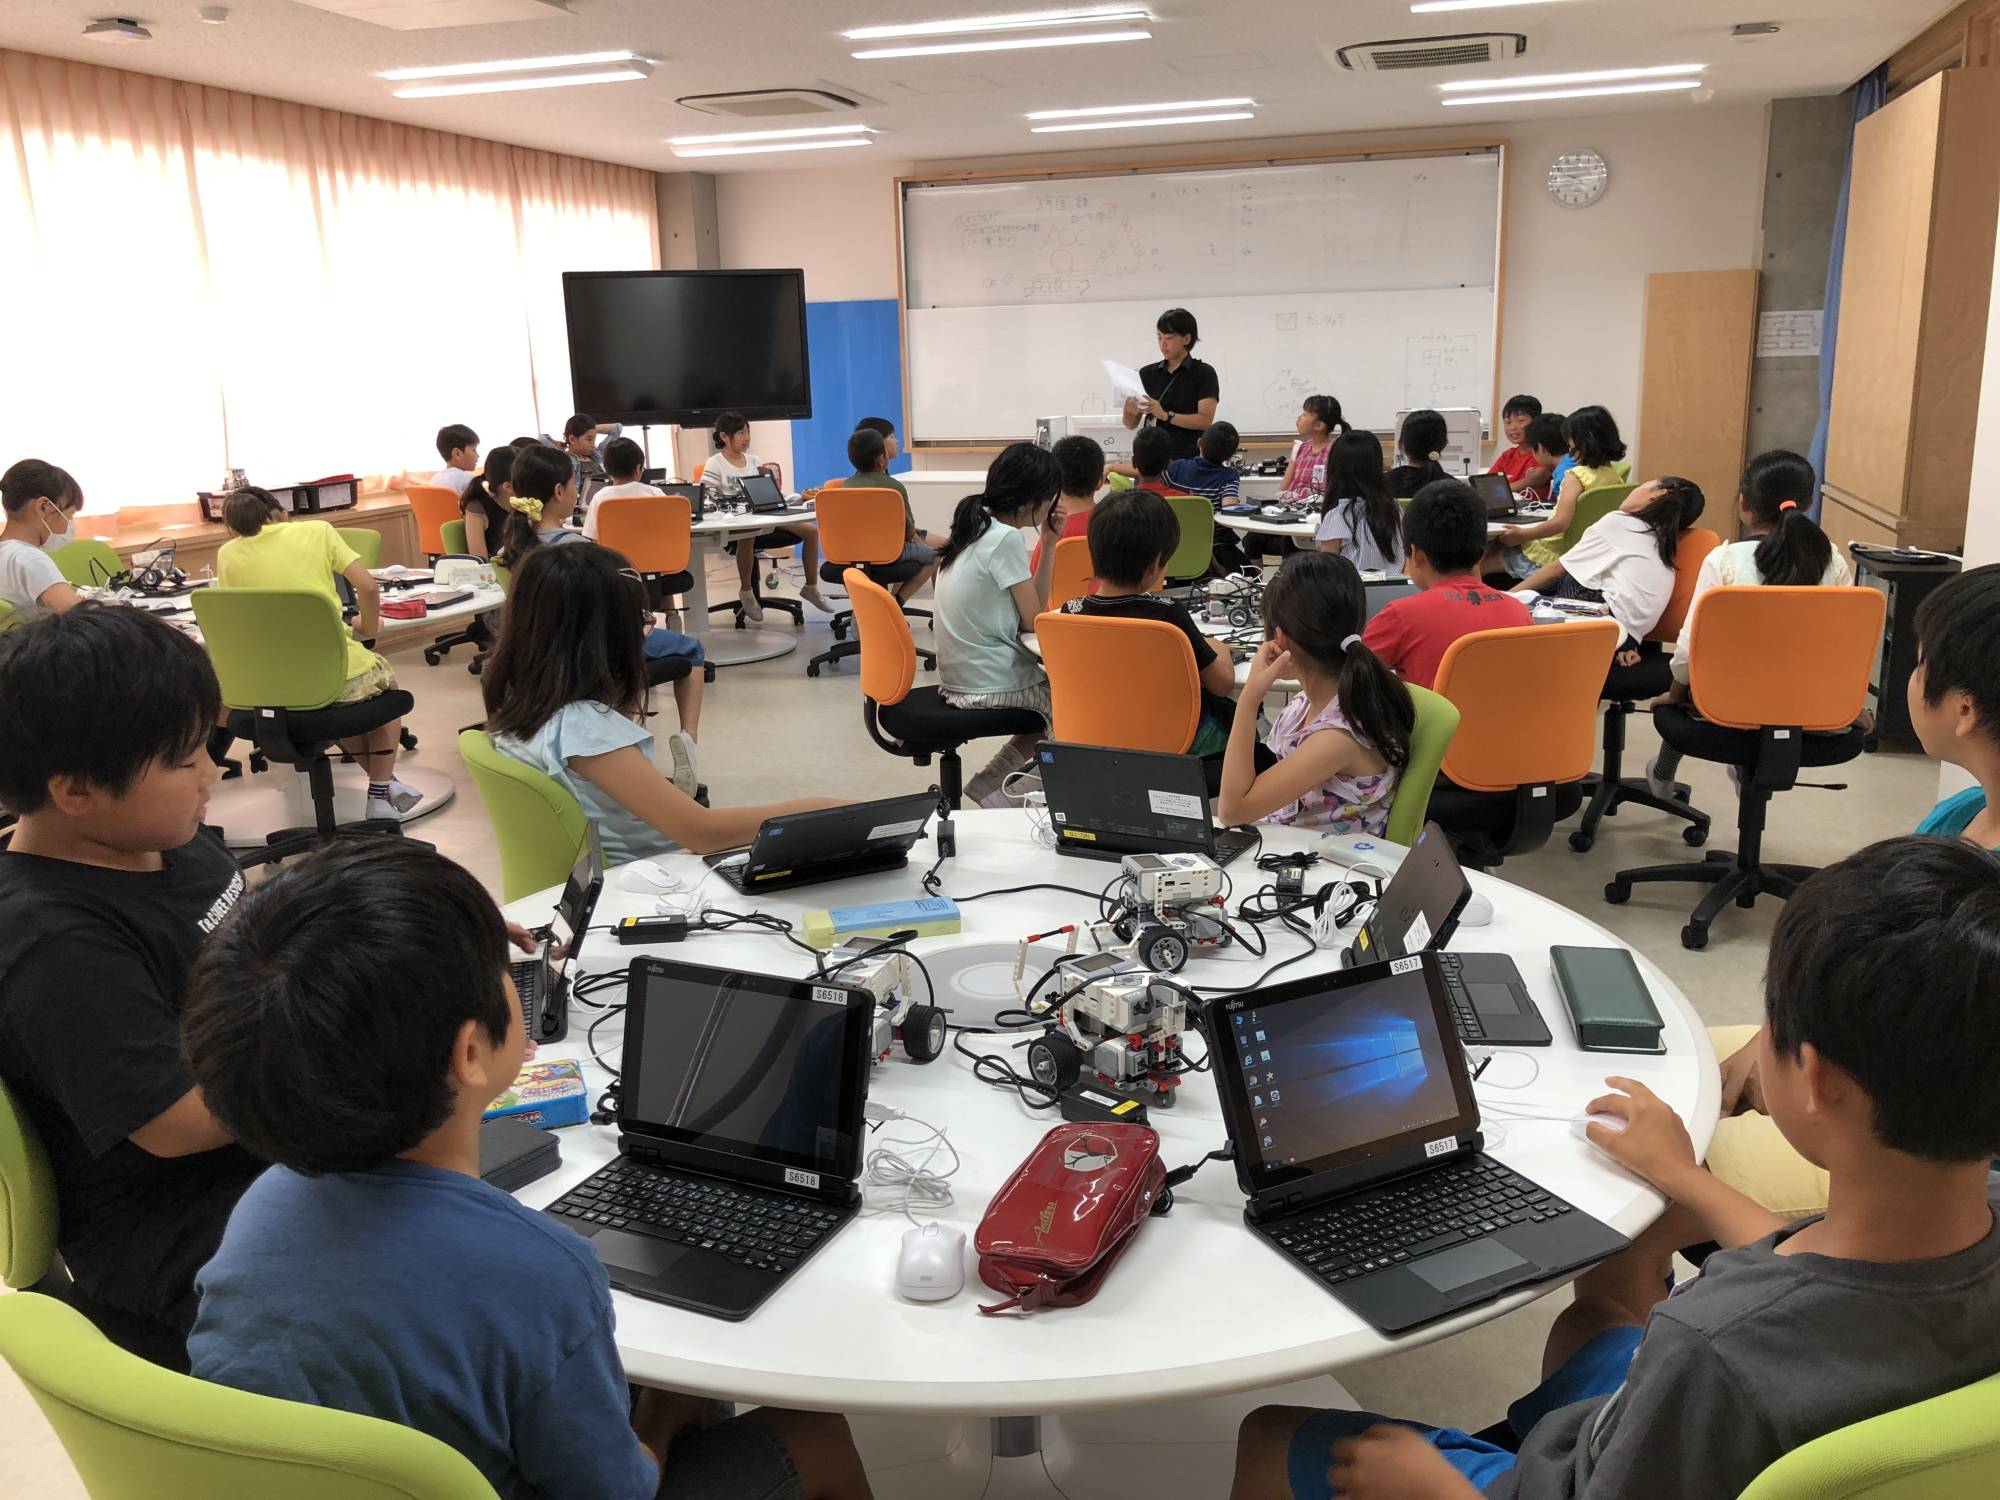 Students listen to a teacher explain a class exercise involving artificial intelligence at Midorino Gakuen Compulsory Education School in Tsukuba, Ibaraki Prefecture, in July 2019. | MIDORINO GAKUEN COMPULSORY EDUCATION SCHOOL